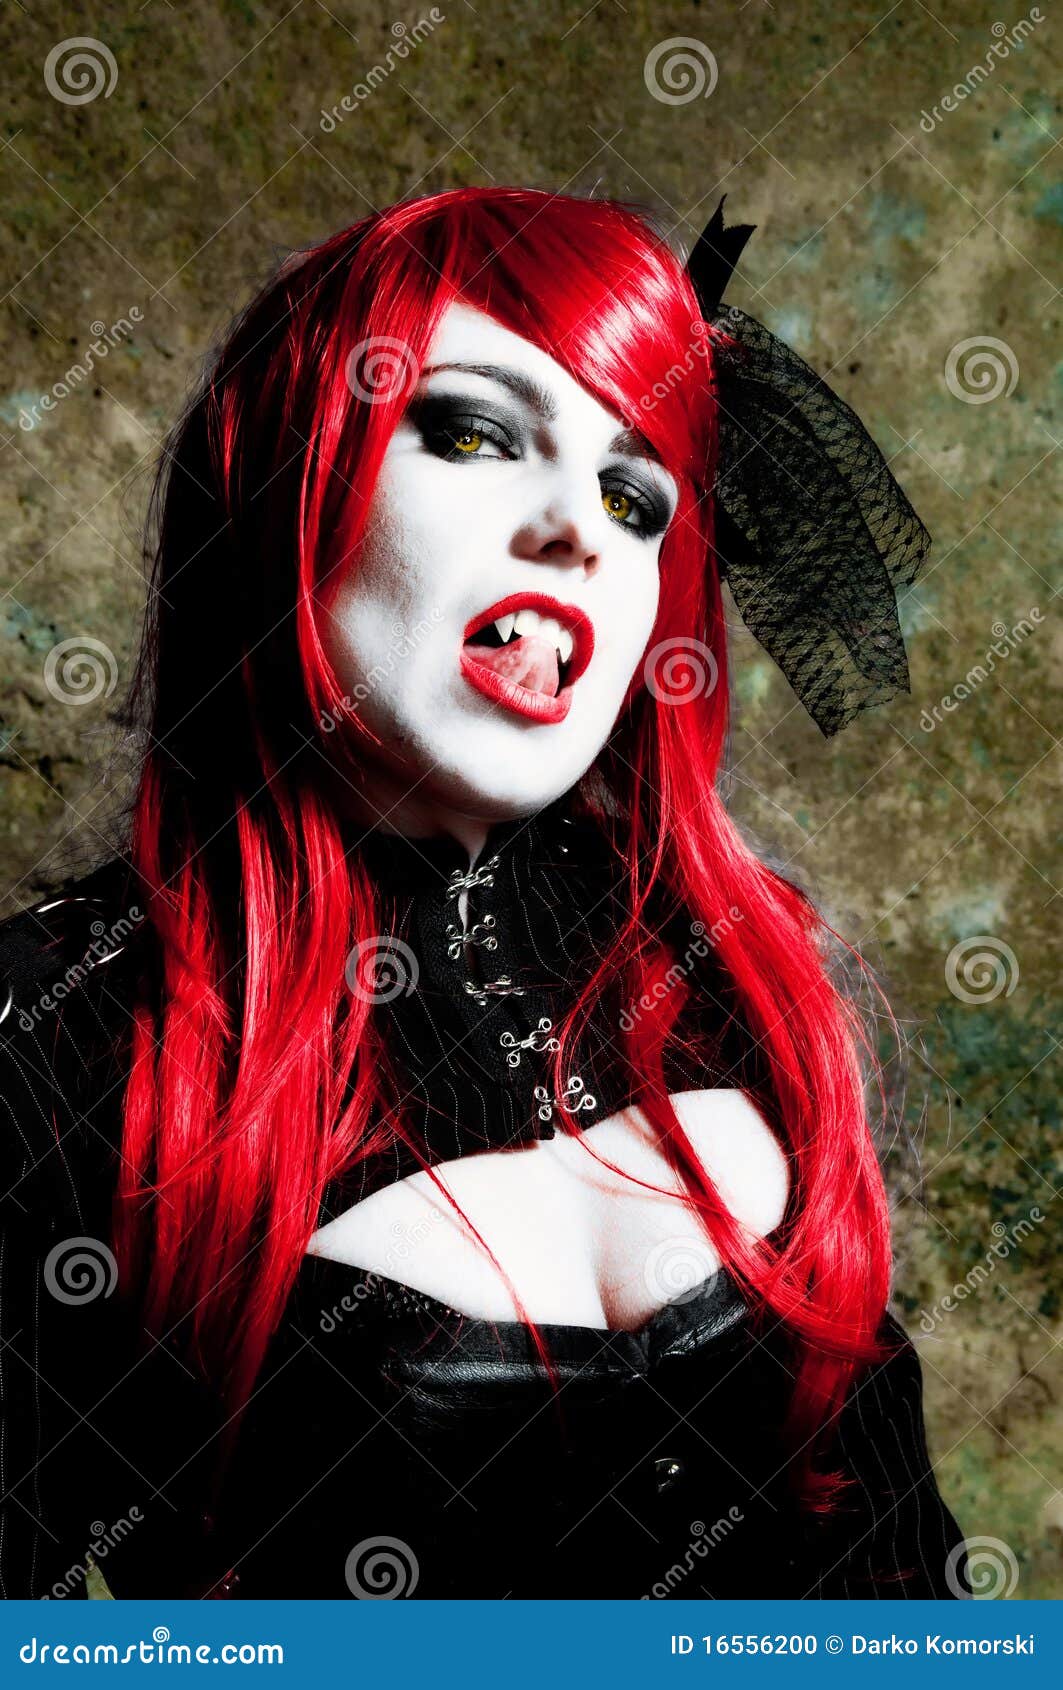 Redhead vampire stock photo. Image of female, beauty - 16556200